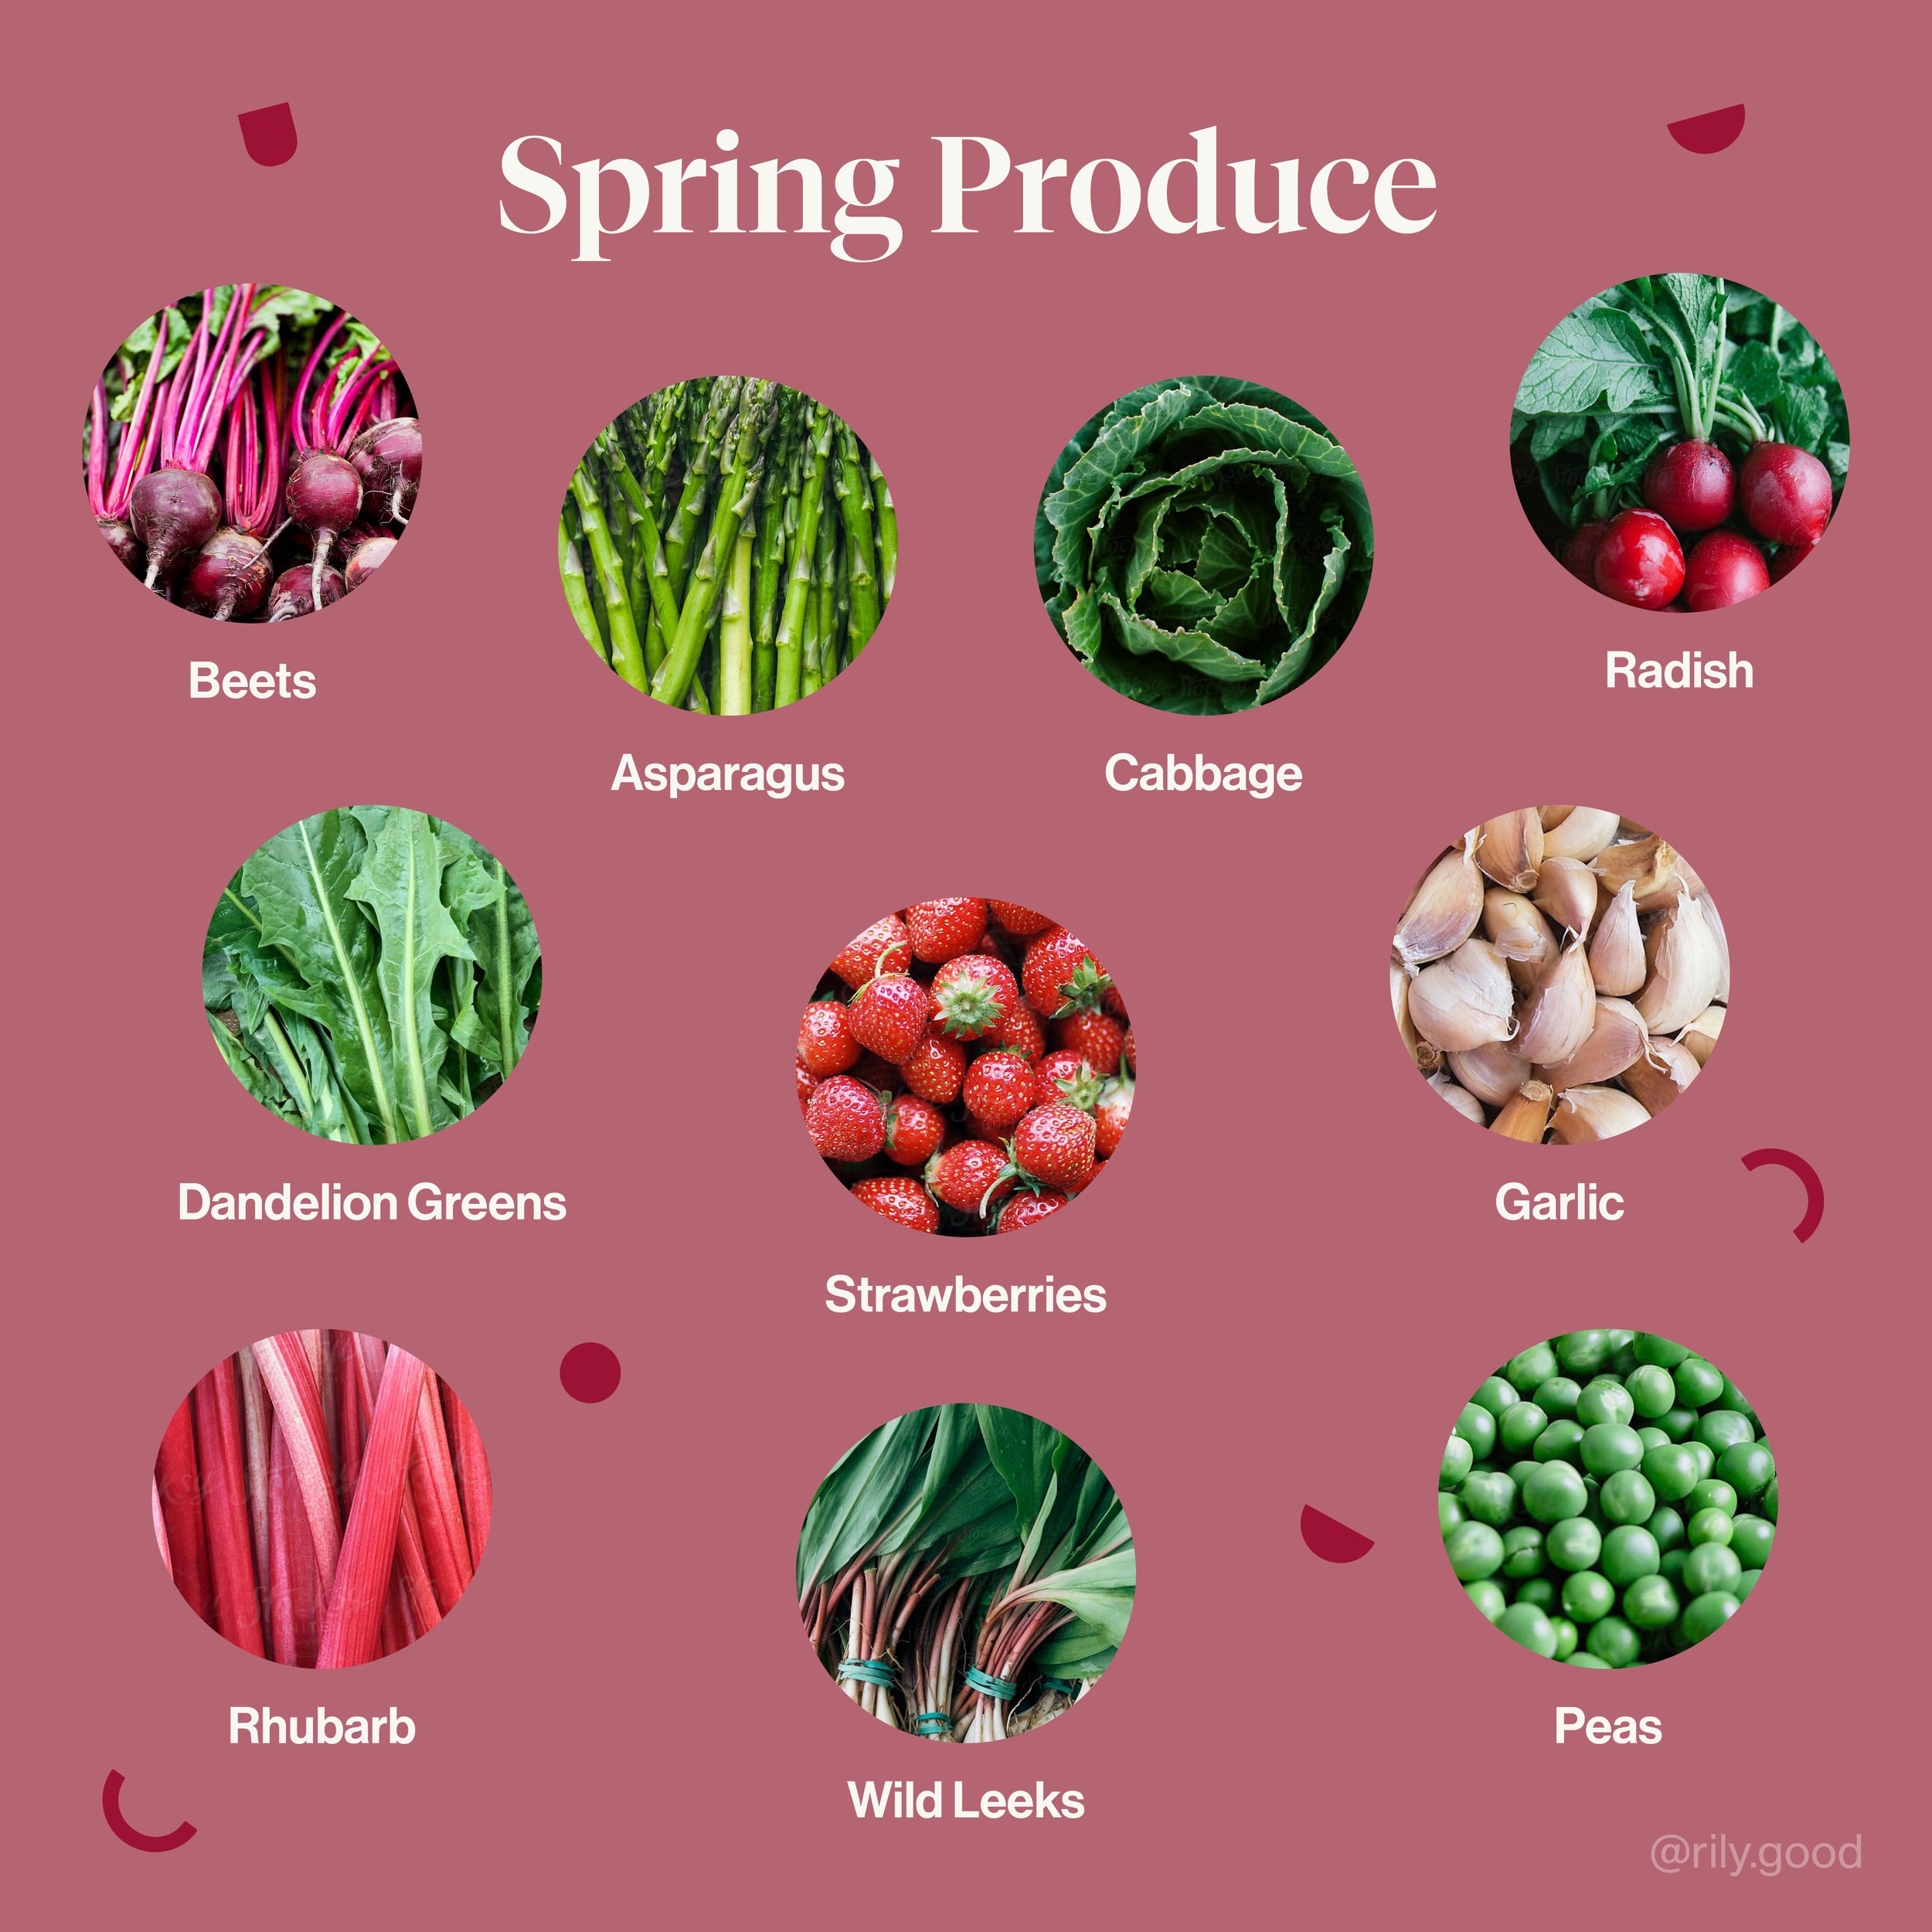 SpringProduce.jpg